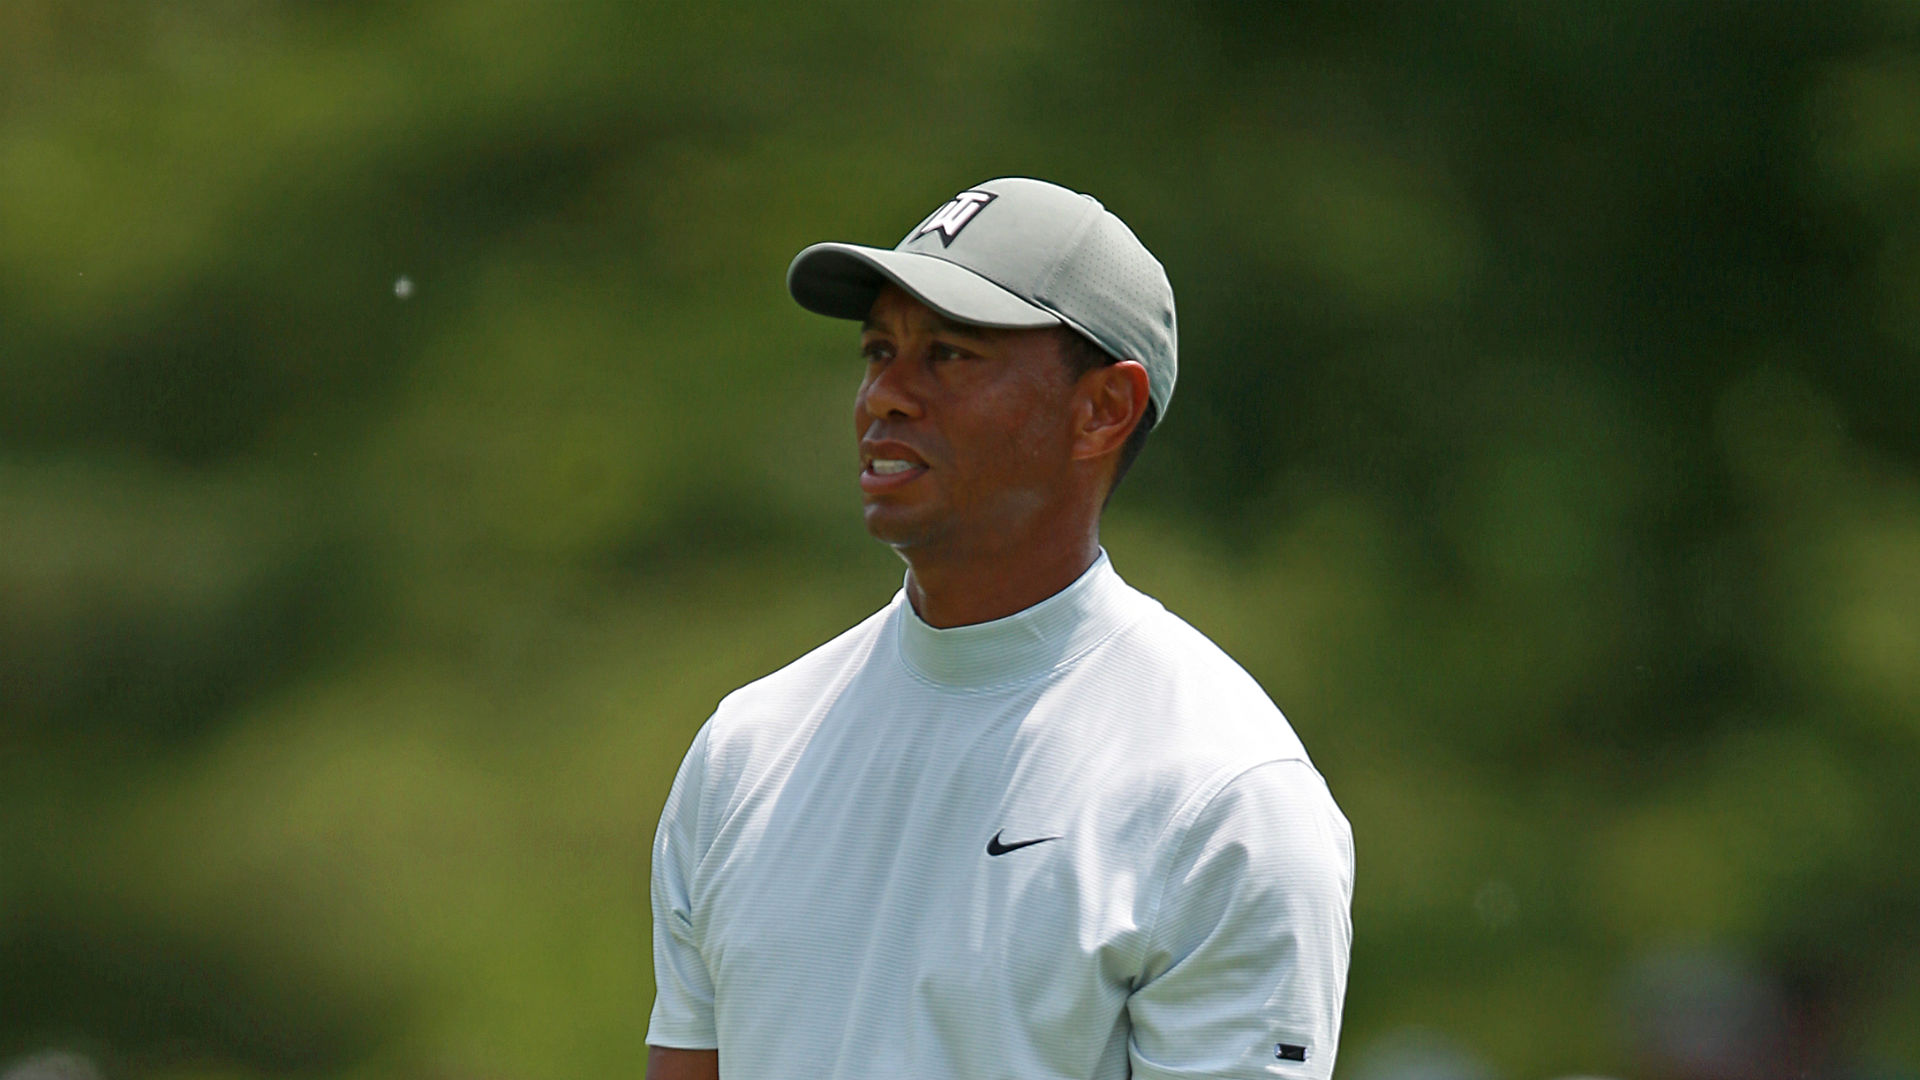 Flipboard: 2019 U.S. Open odds, picks: Tiger Woods projection from advanced computer ...